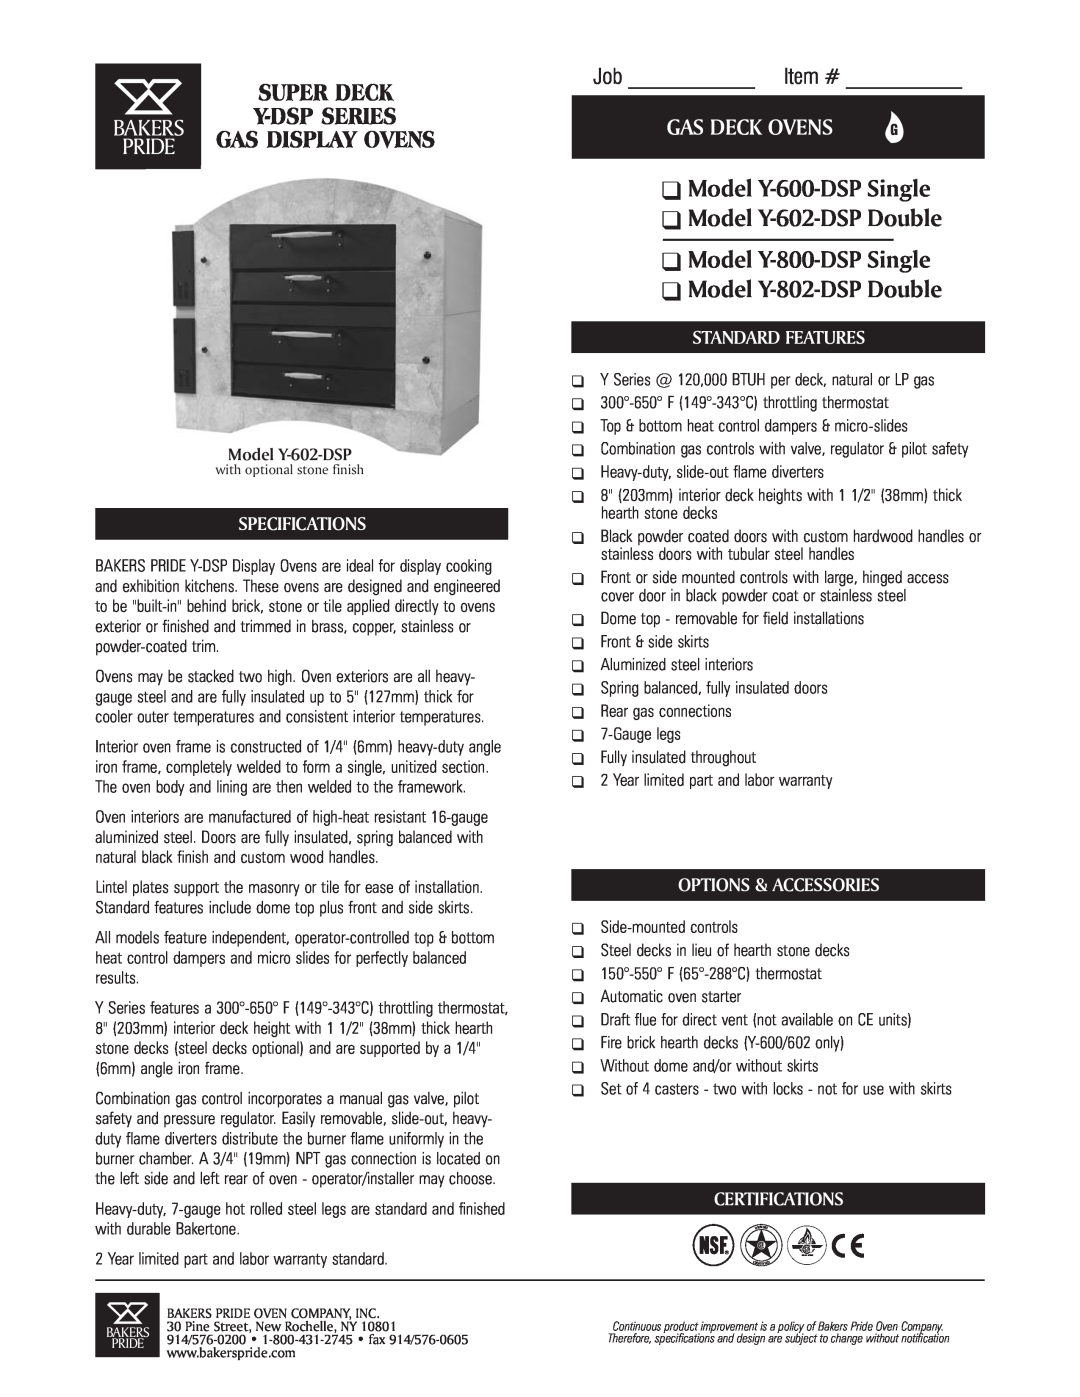 Bakers Pride Oven Y-802-DSP specifications Model Y-600-DSPSingle Model Y-602-DSPDouble, Gas Deck Ovens, Job Item #, Bakers 